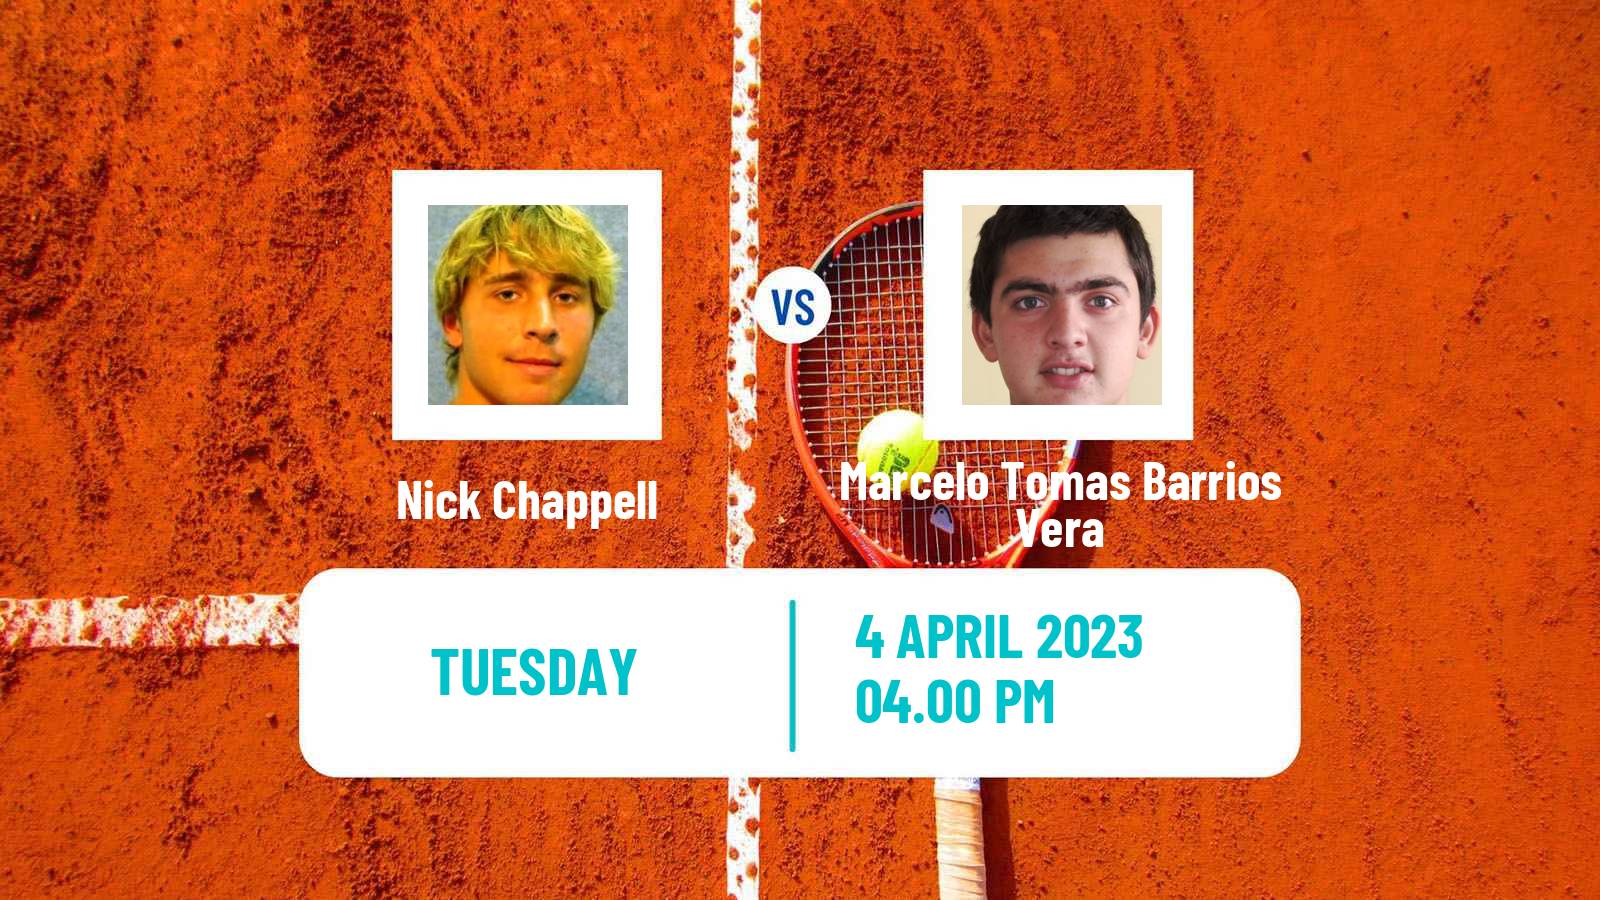 Tennis ATP Challenger Nick Chappell - Marcelo Tomas Barrios Vera